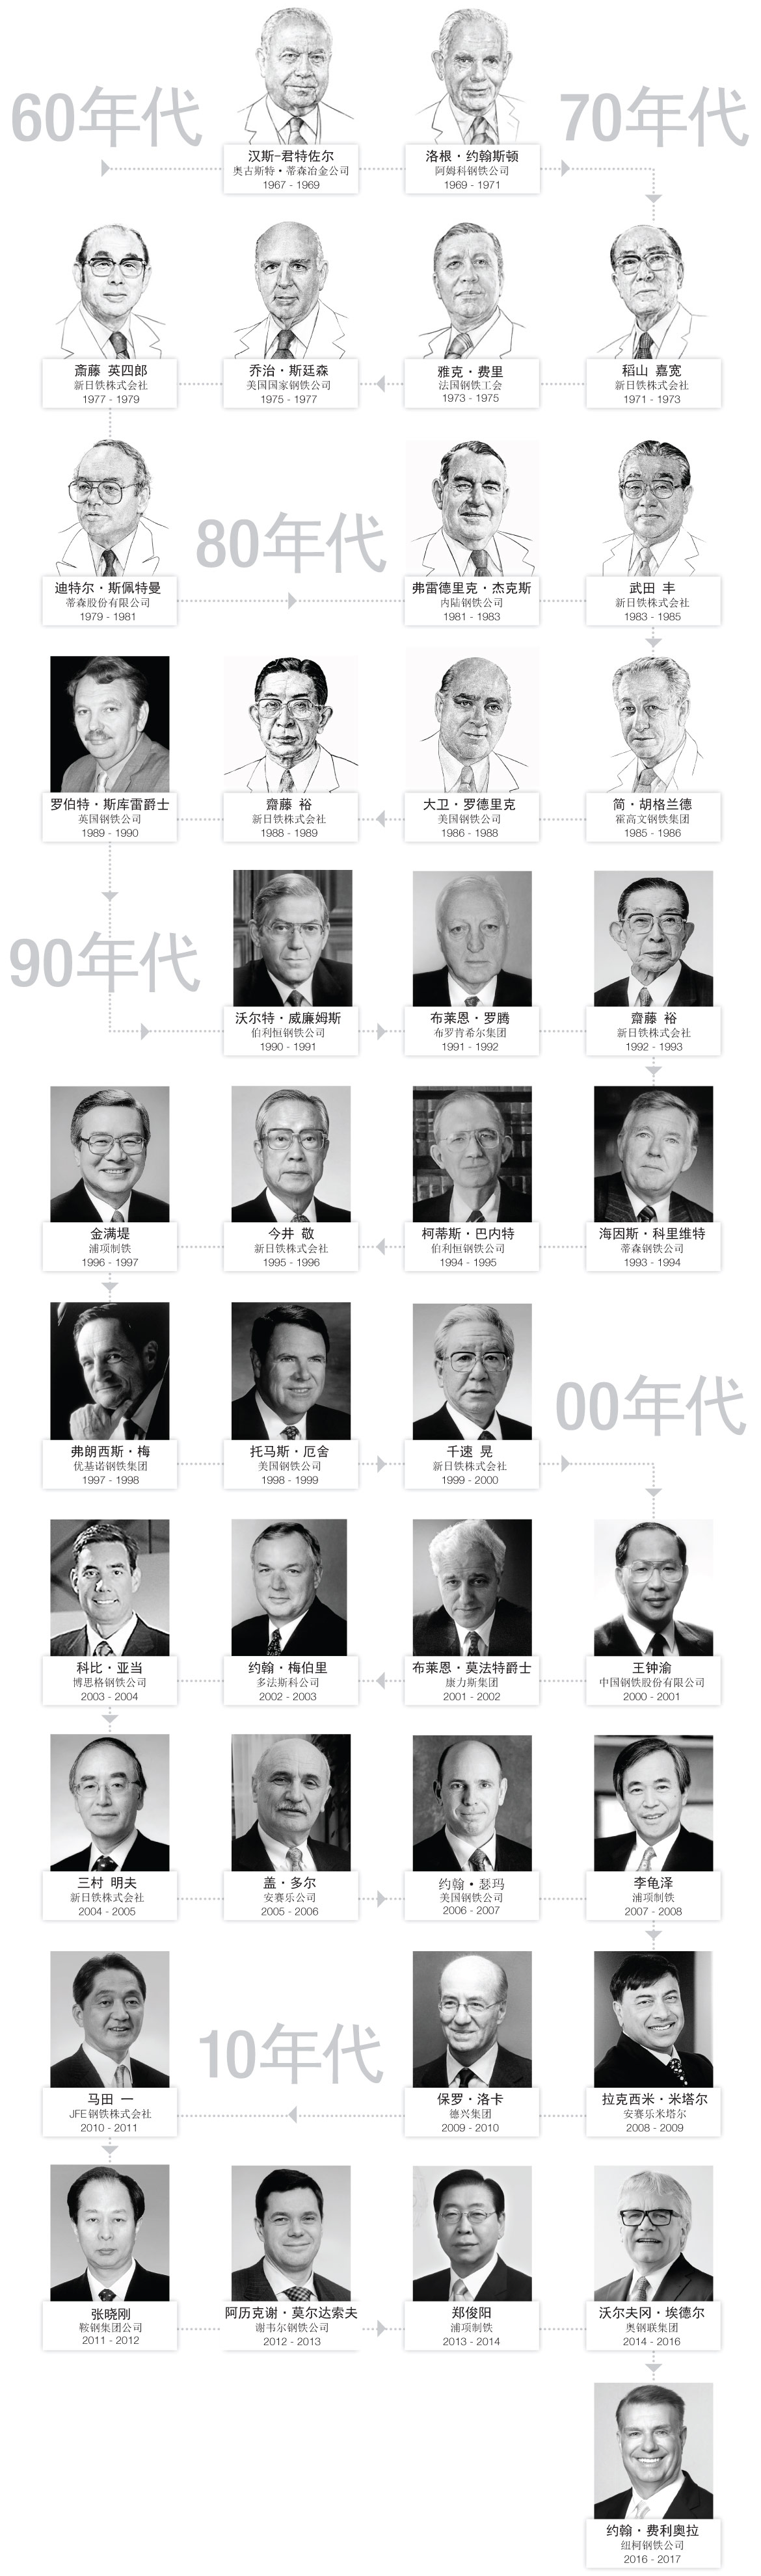 Worldsteel Association Chairmen 1967 - 2017